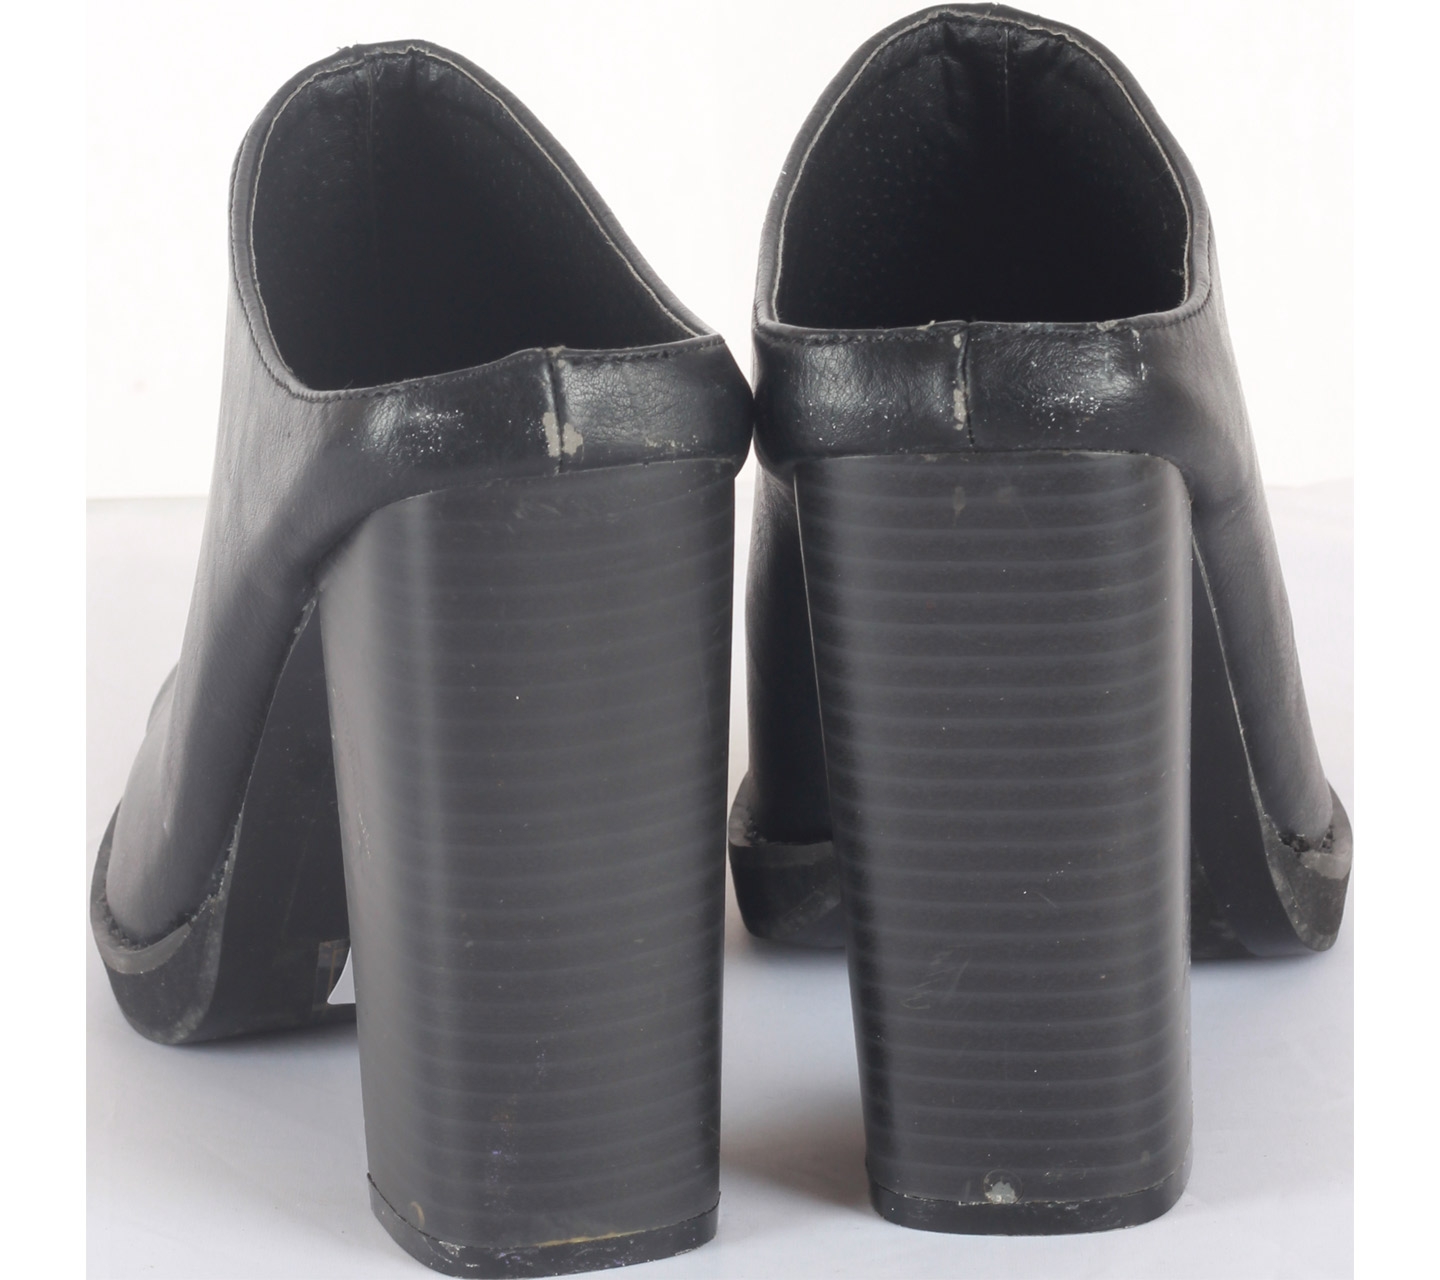 Truffle Collection Black Heels